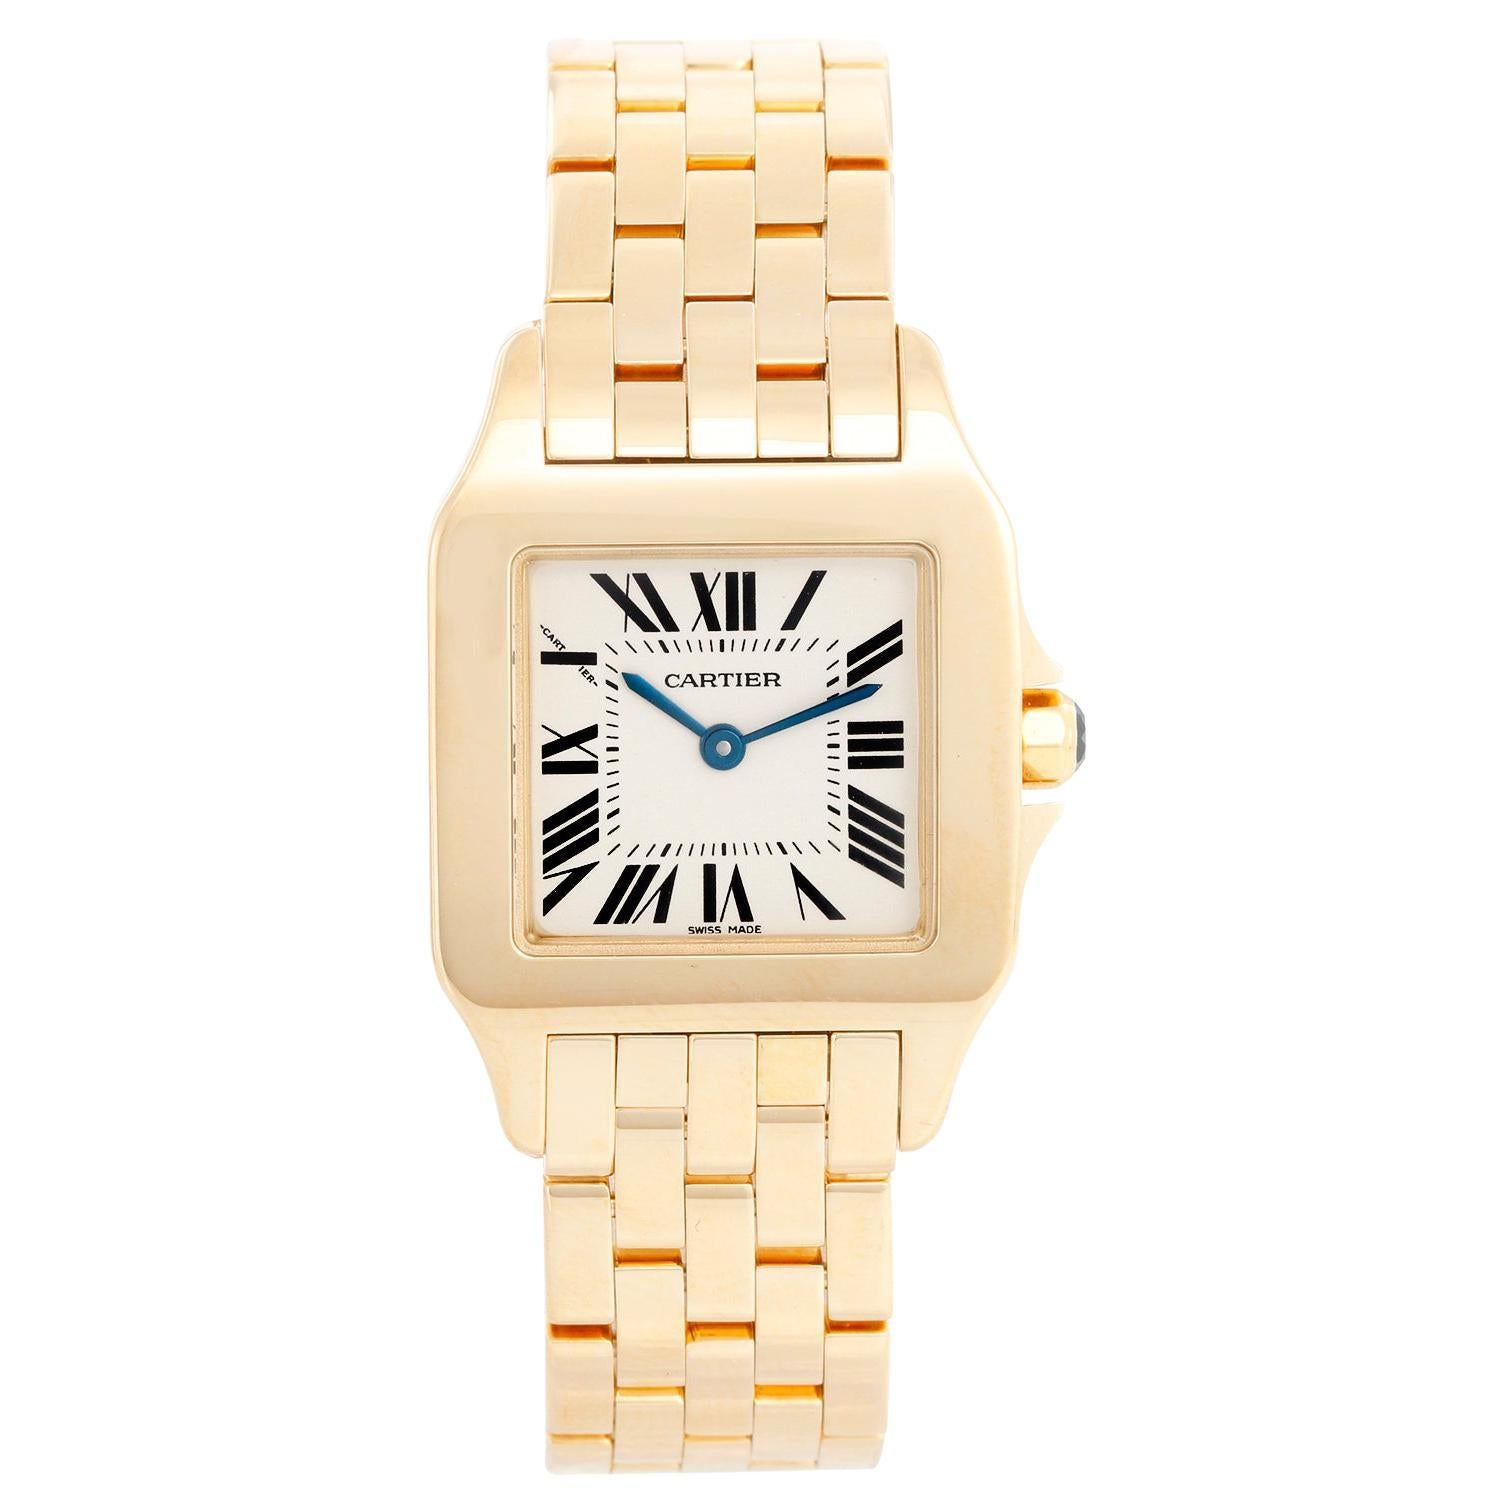 Cartier Santos Demoiselle 18k Yellow Gold Midsize Watch 2702